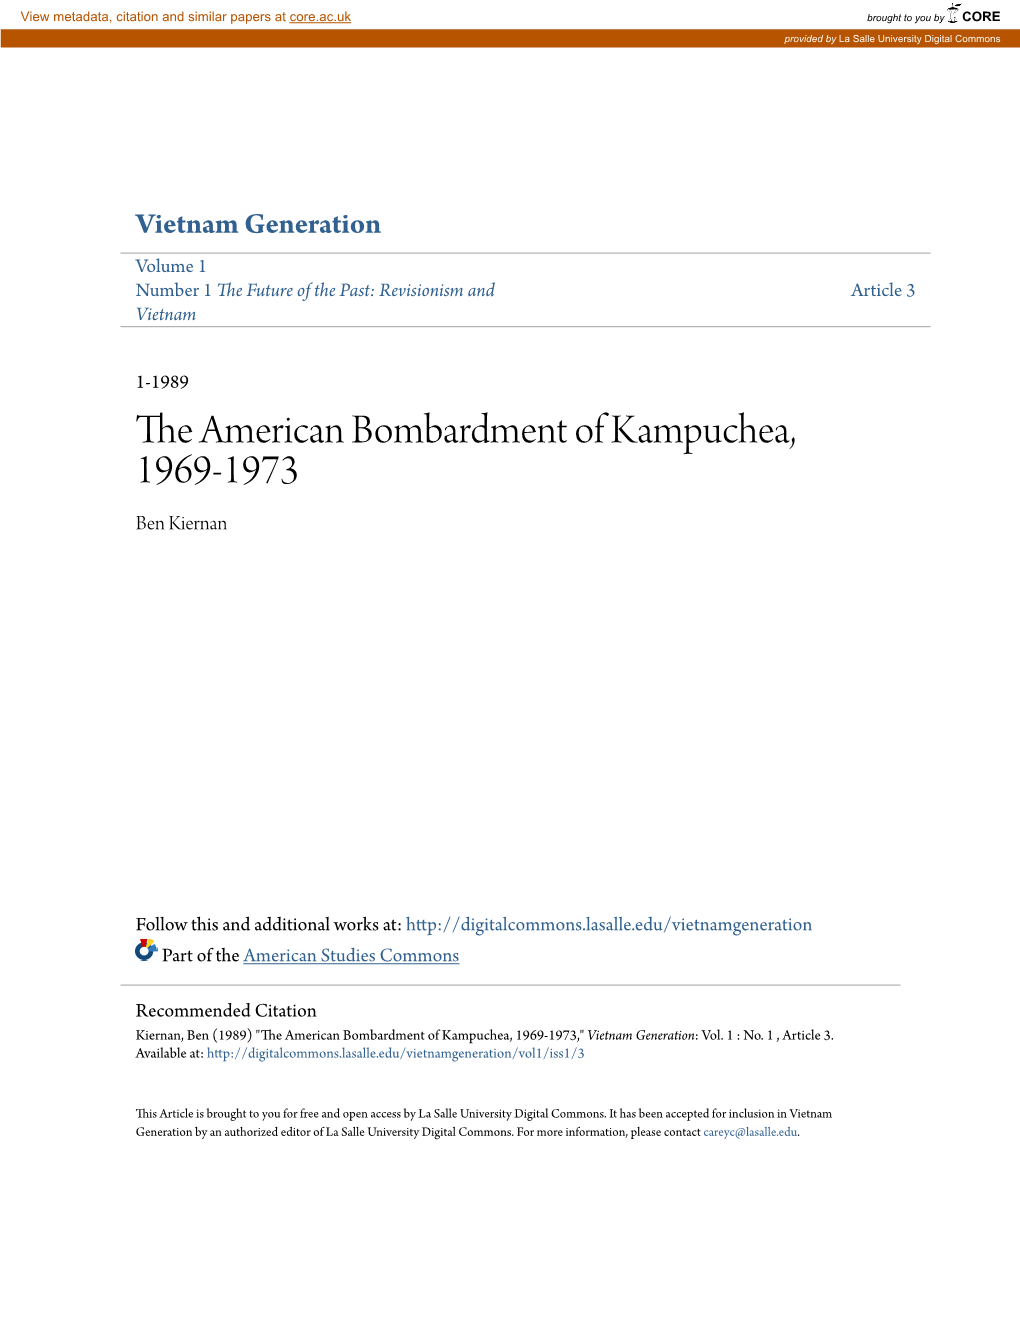 The American Bombardment of Kampuchea, 1969-1973 Ben Kiernan